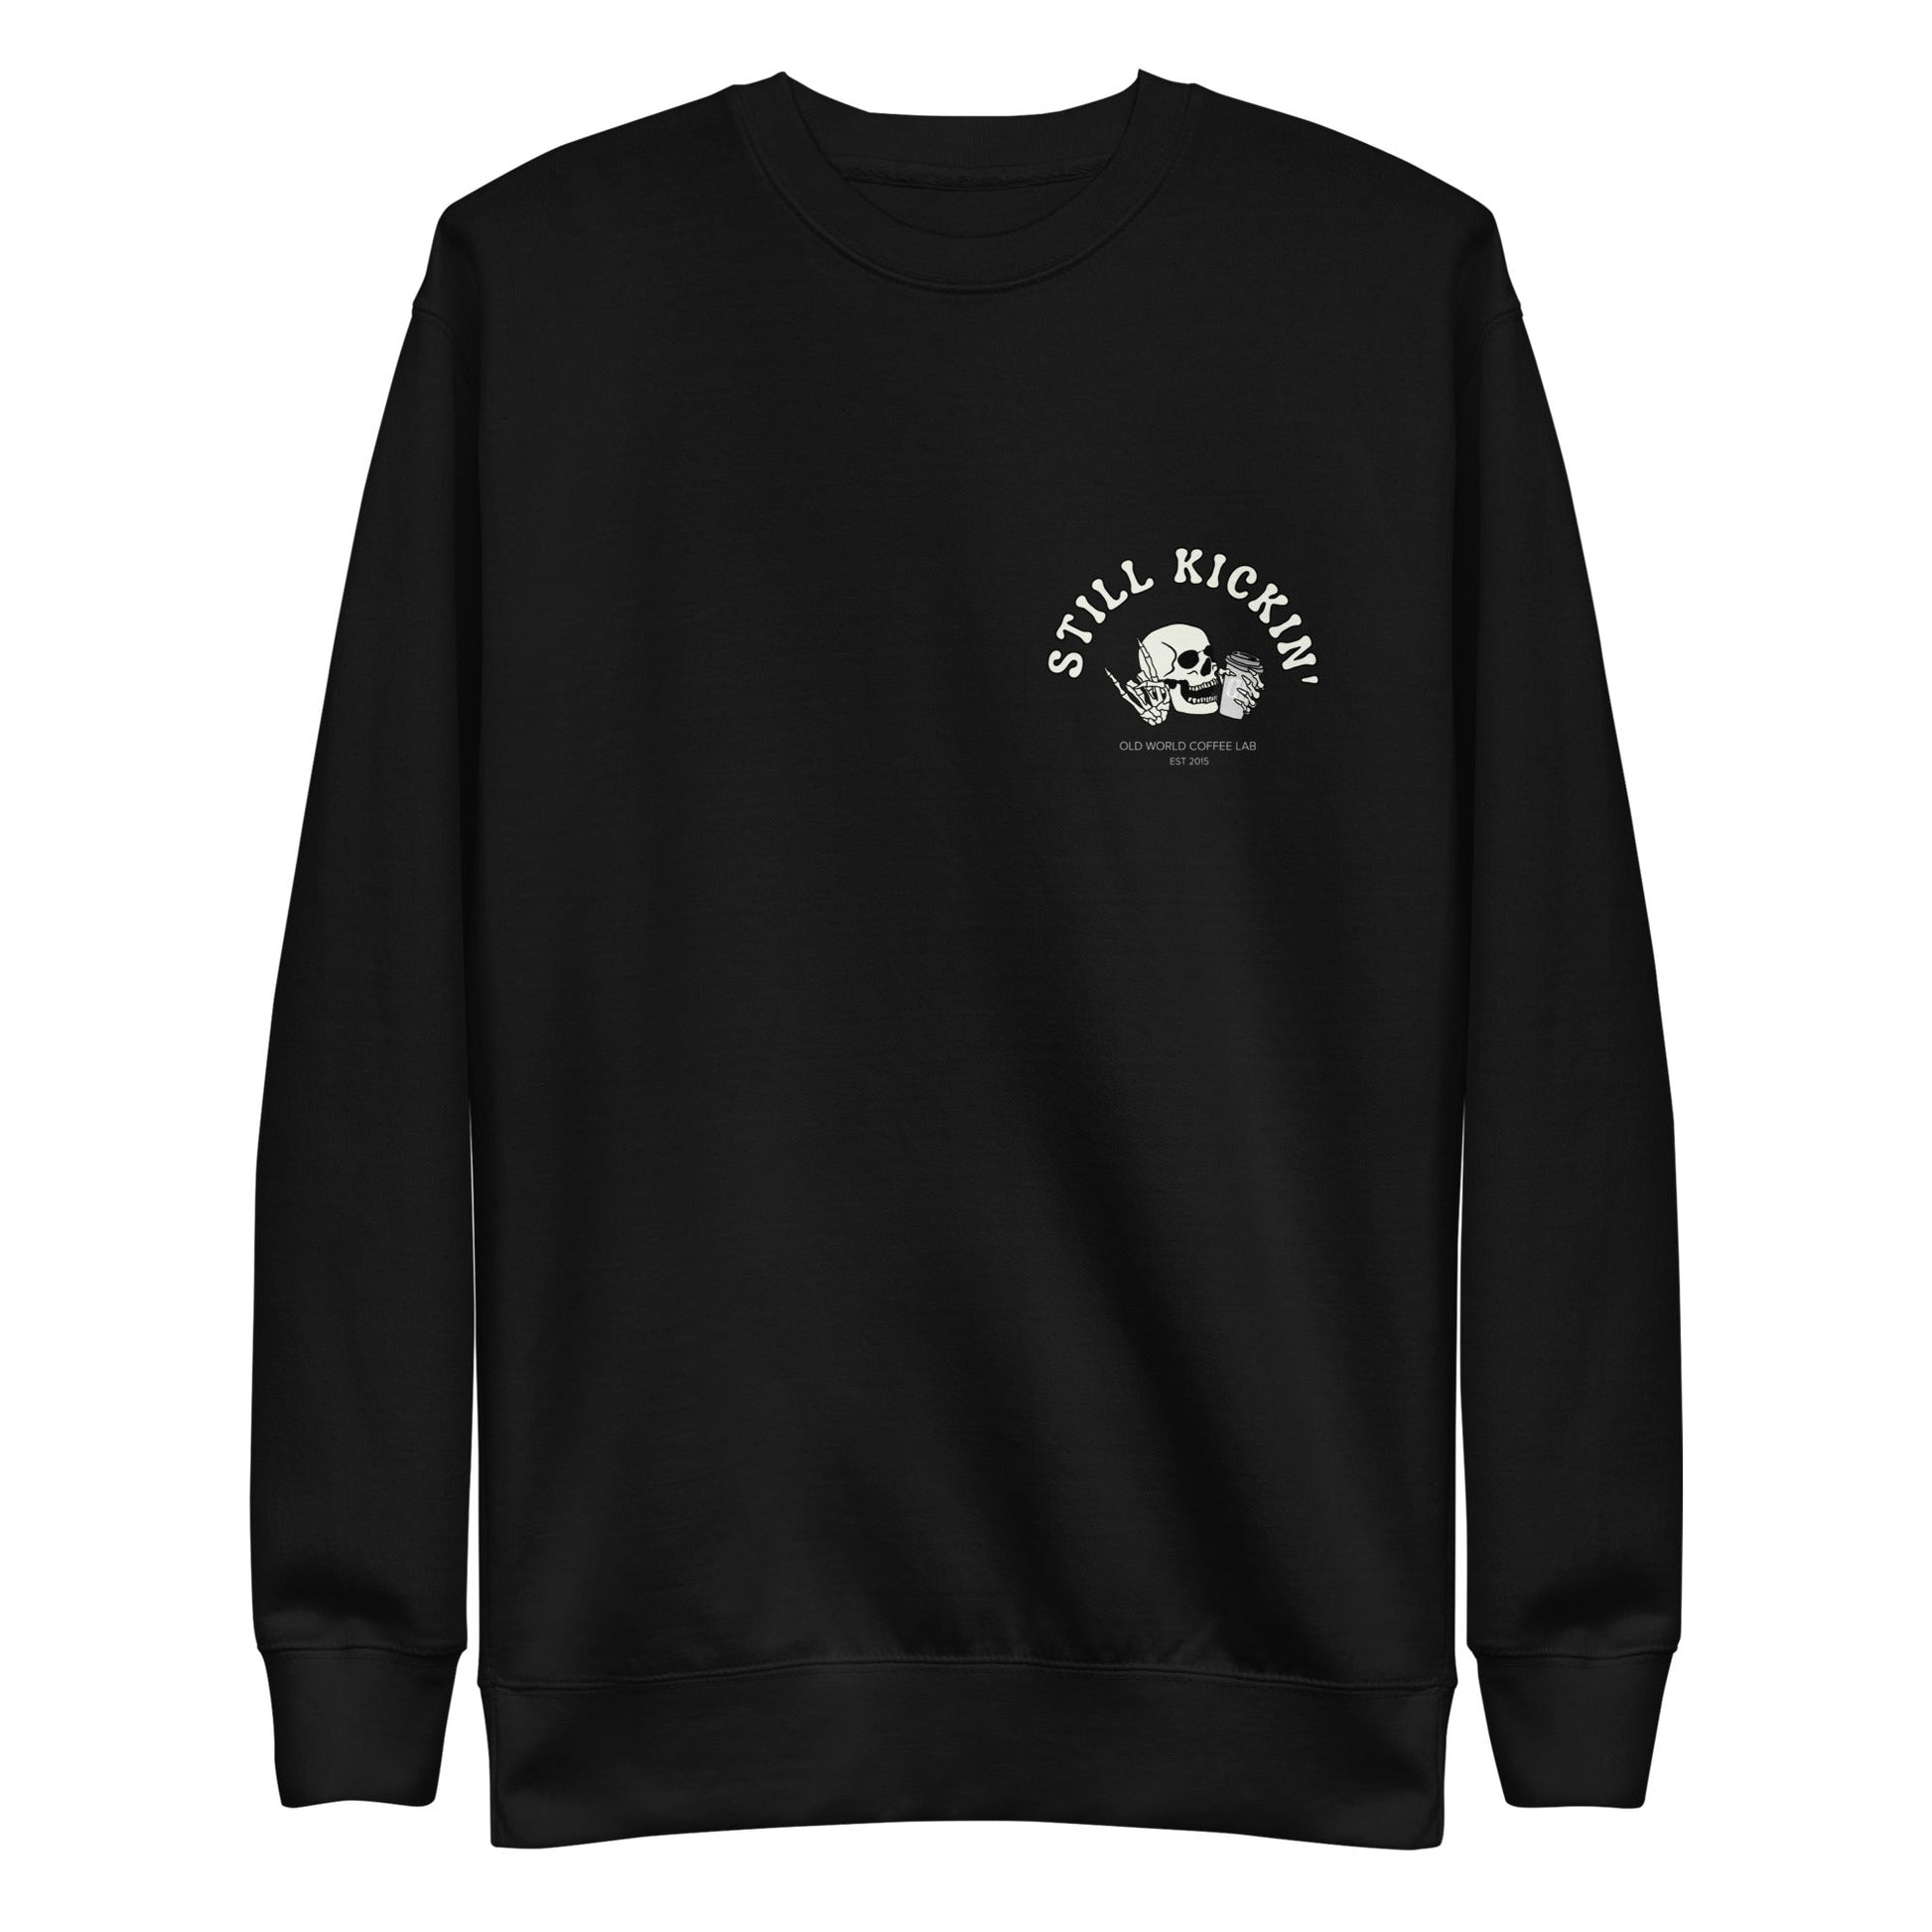 Still Kickin' Small Logo Crewneck Sweatshirt - Old World Coffee Roasters